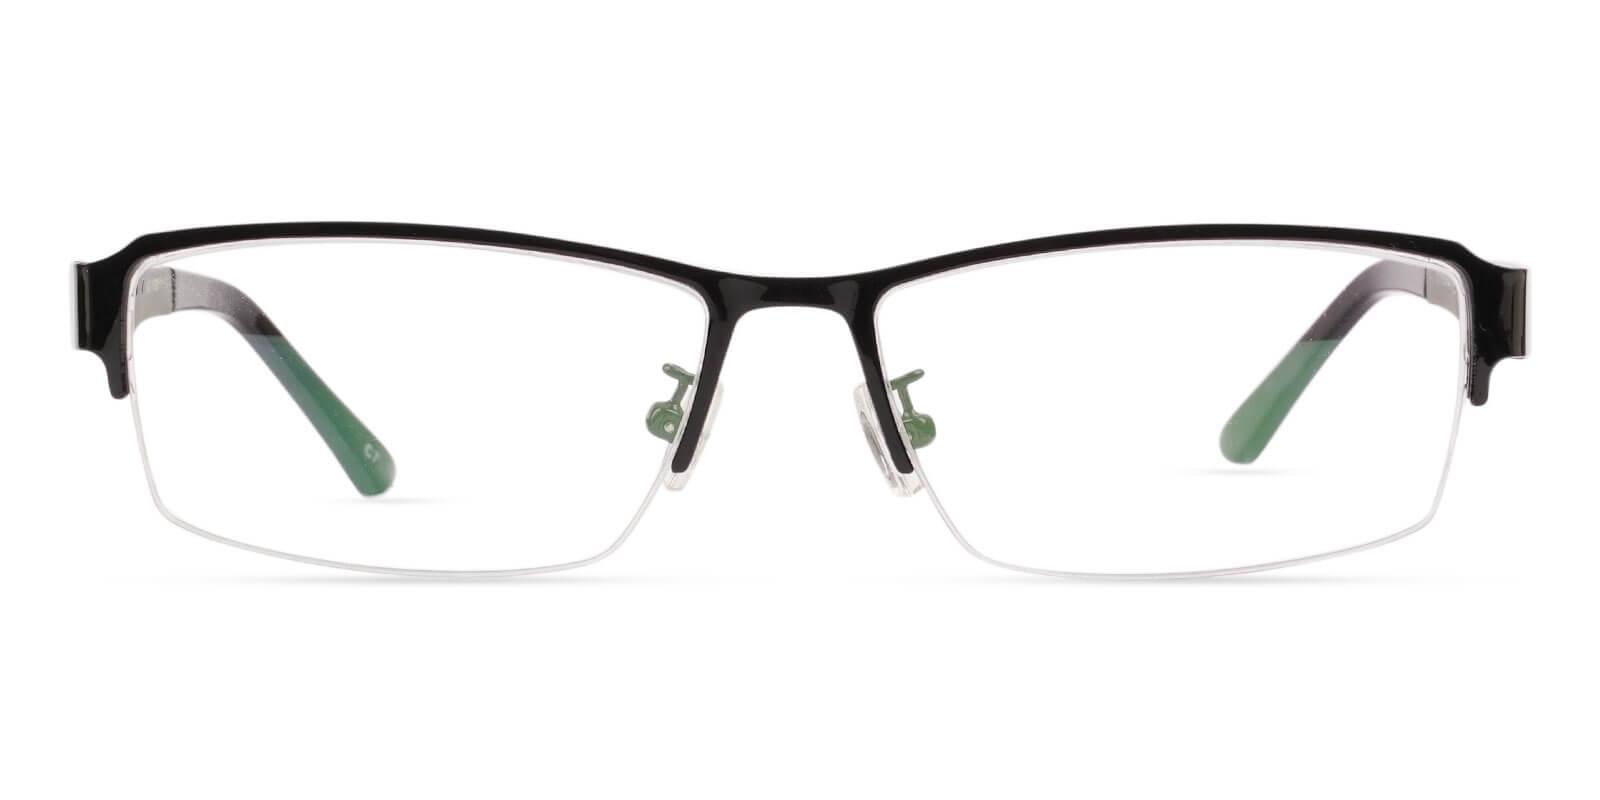 David Black Metal Eyeglasses , NosePads Frames from ABBE Glasses